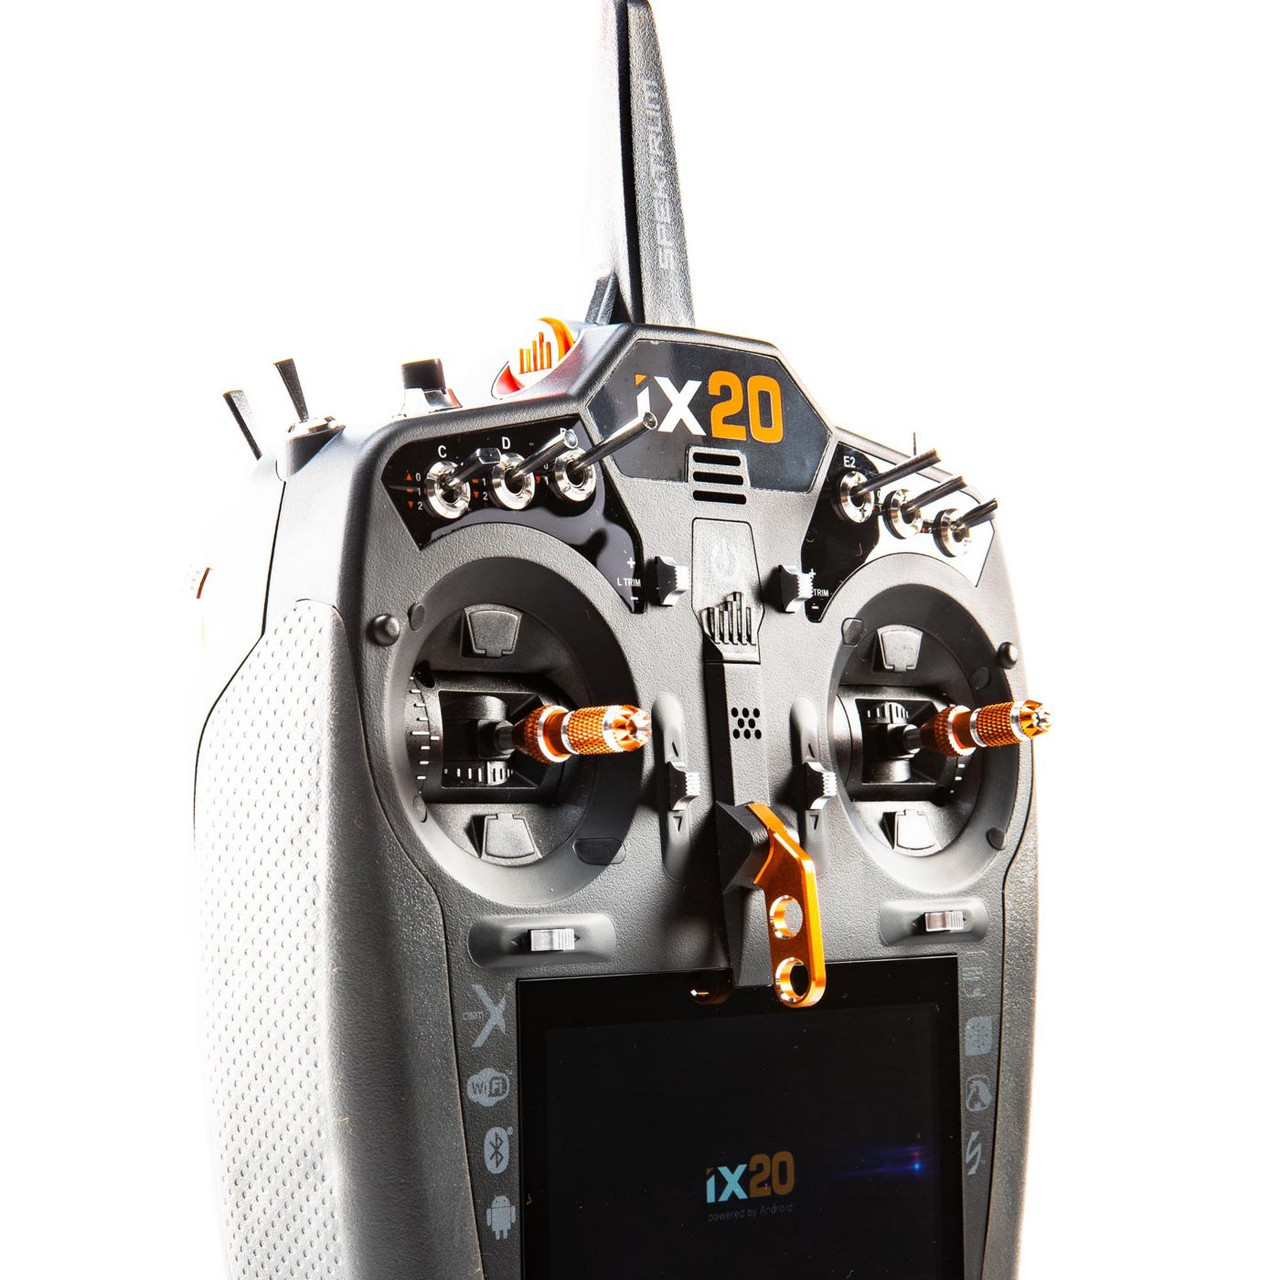 Spektrum RC iX20 2.4GHz DSMX 20-Channel Radio System (Transmitter Only)